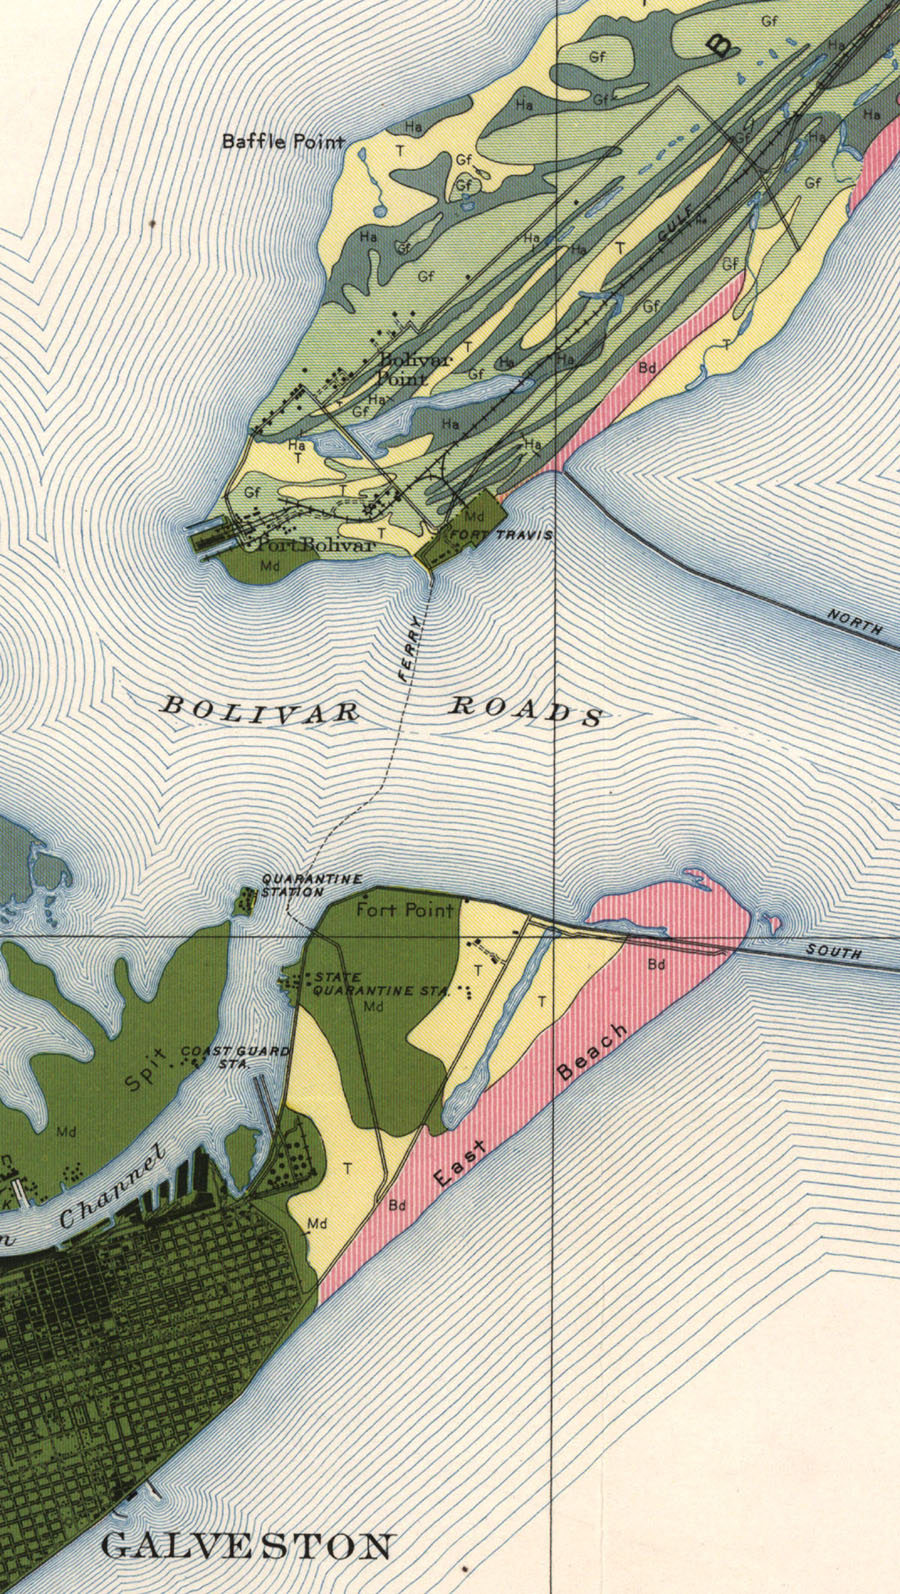 Galveston-Port Bolivar Ferry, map showing route between Port Bolivar and Galveston in 1935.